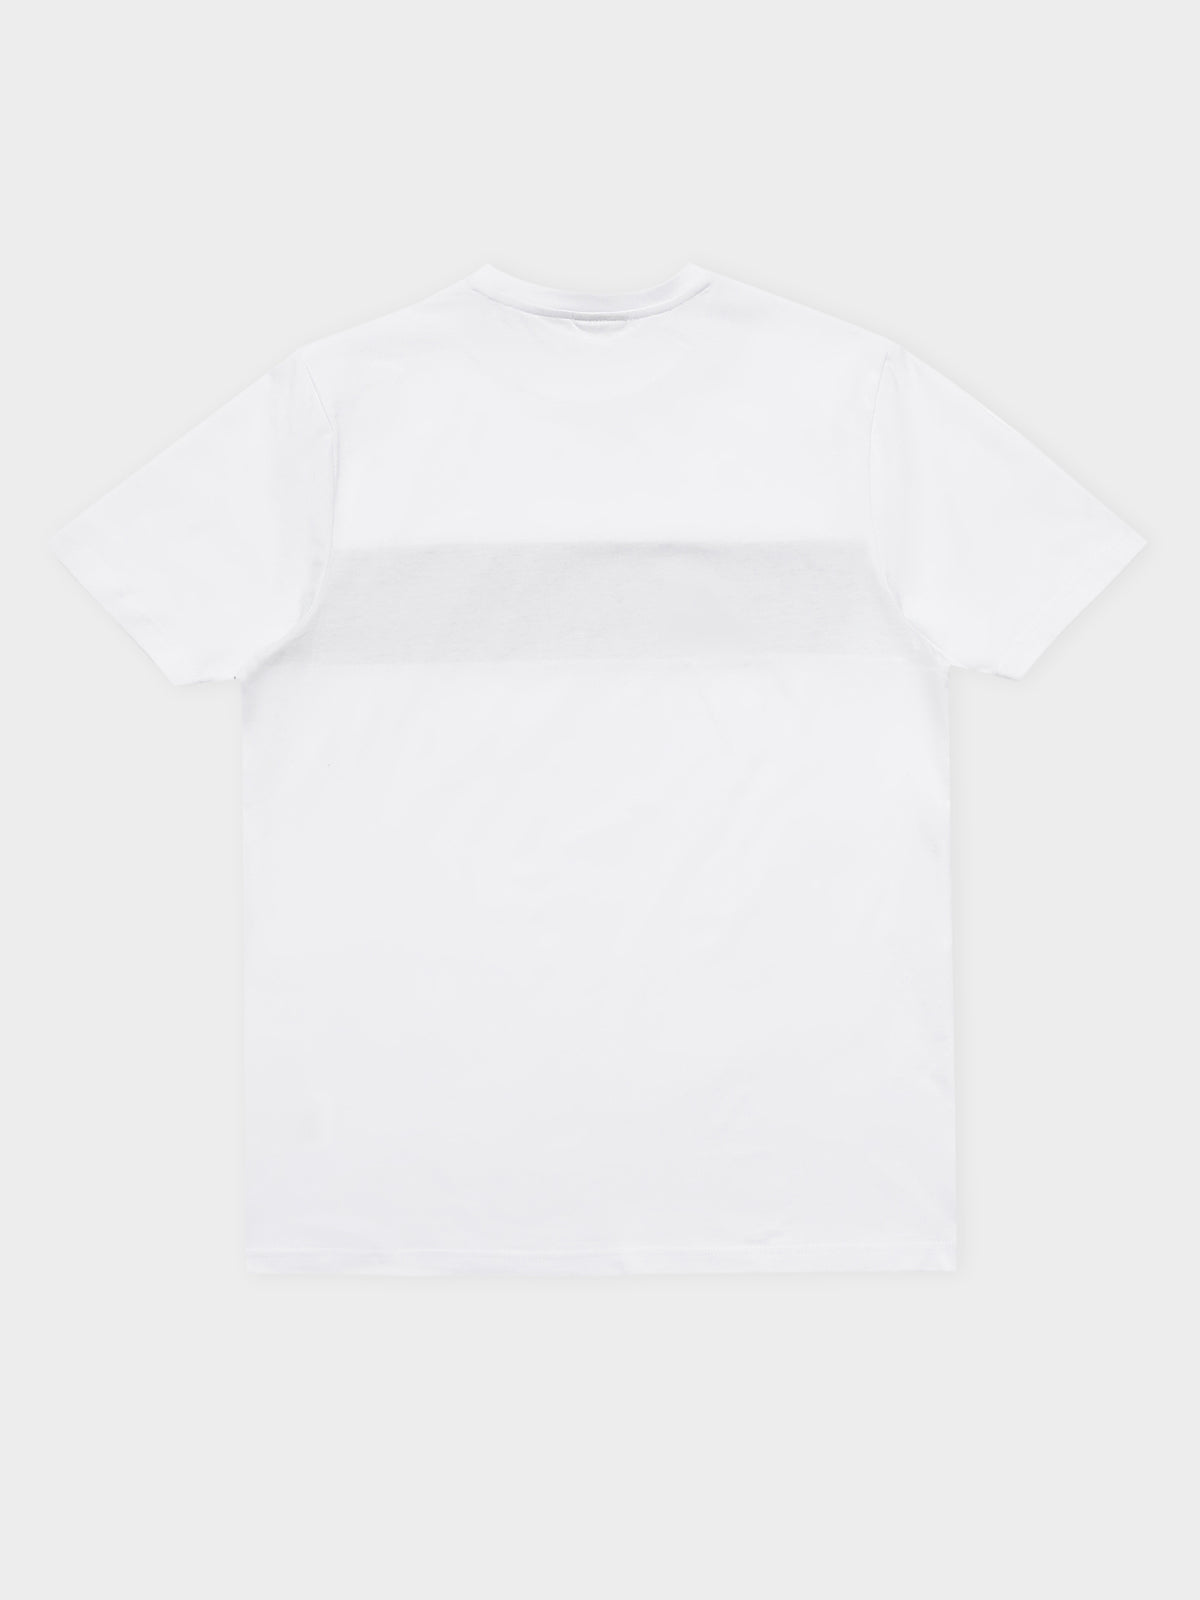 Katanga T-Shirt in White